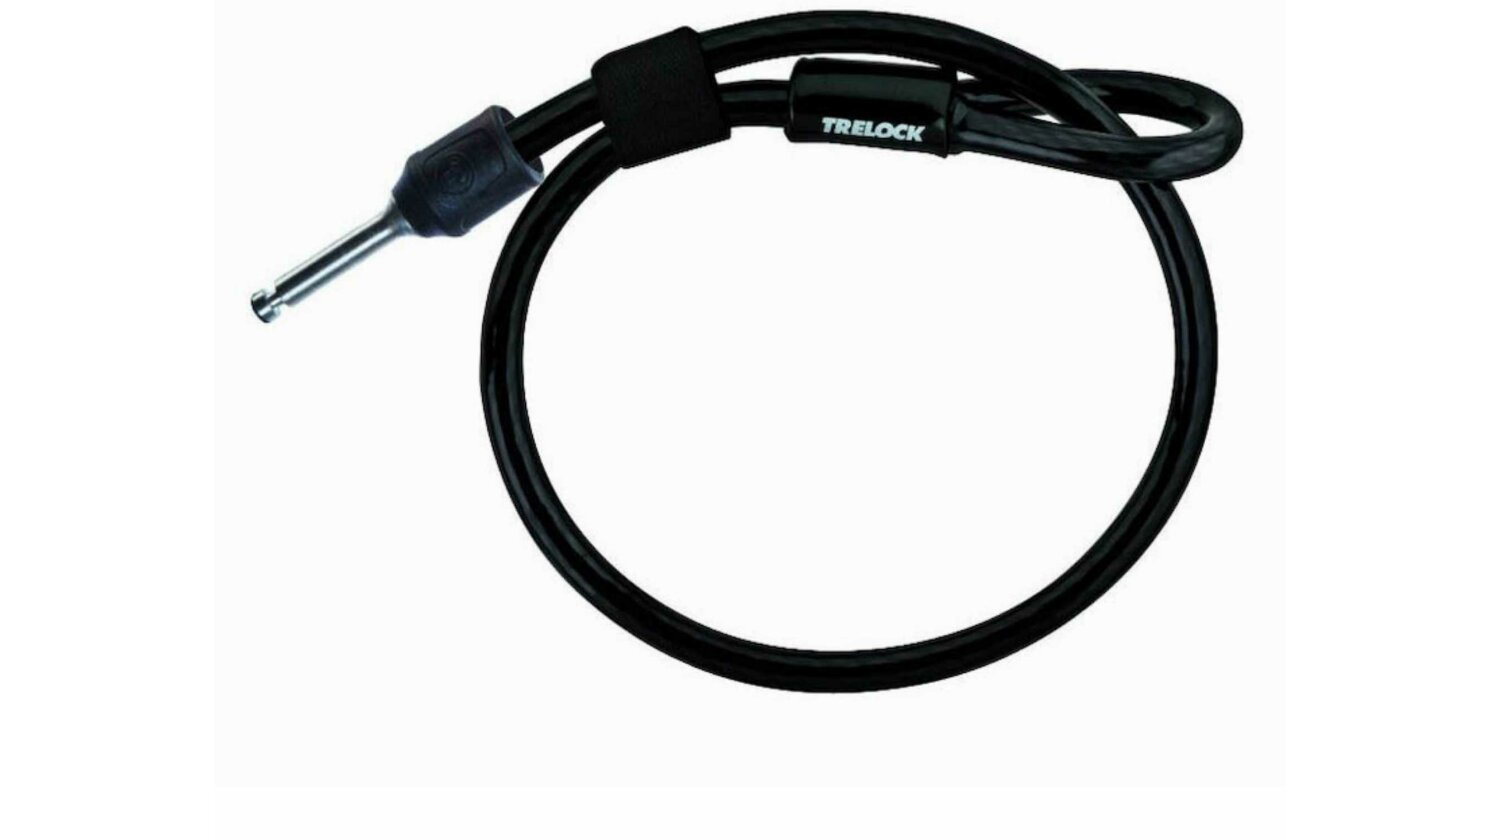 Trelock Anschlie&szlig;kabel ZR 310 10 mm,150 cm